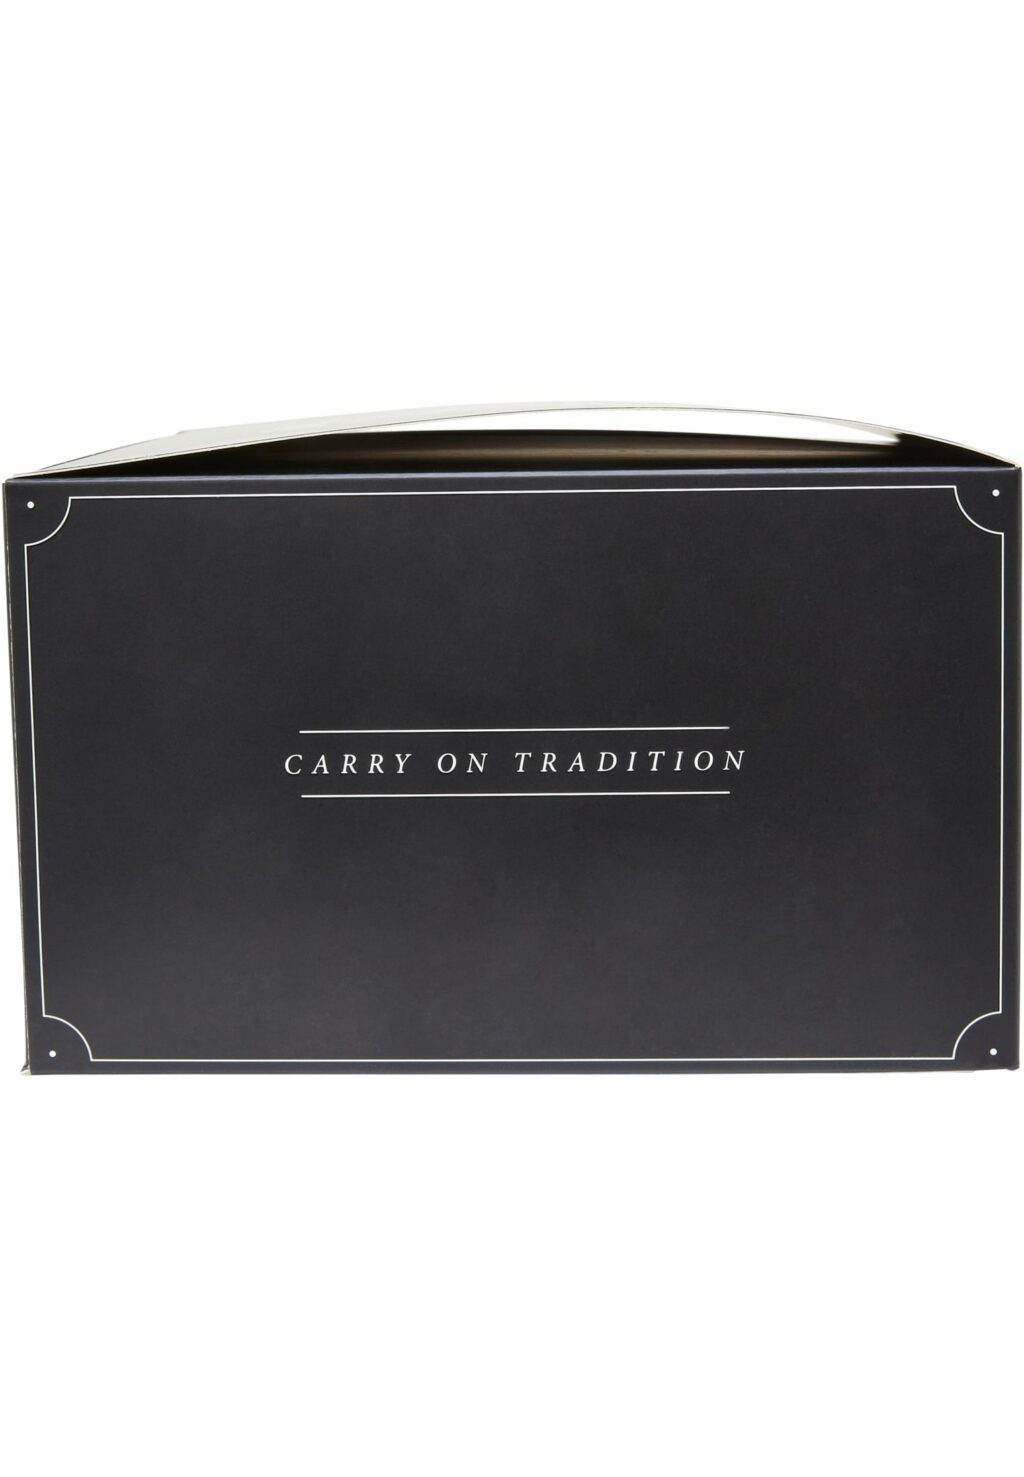 Cayler & Sons Capbox black one CS004